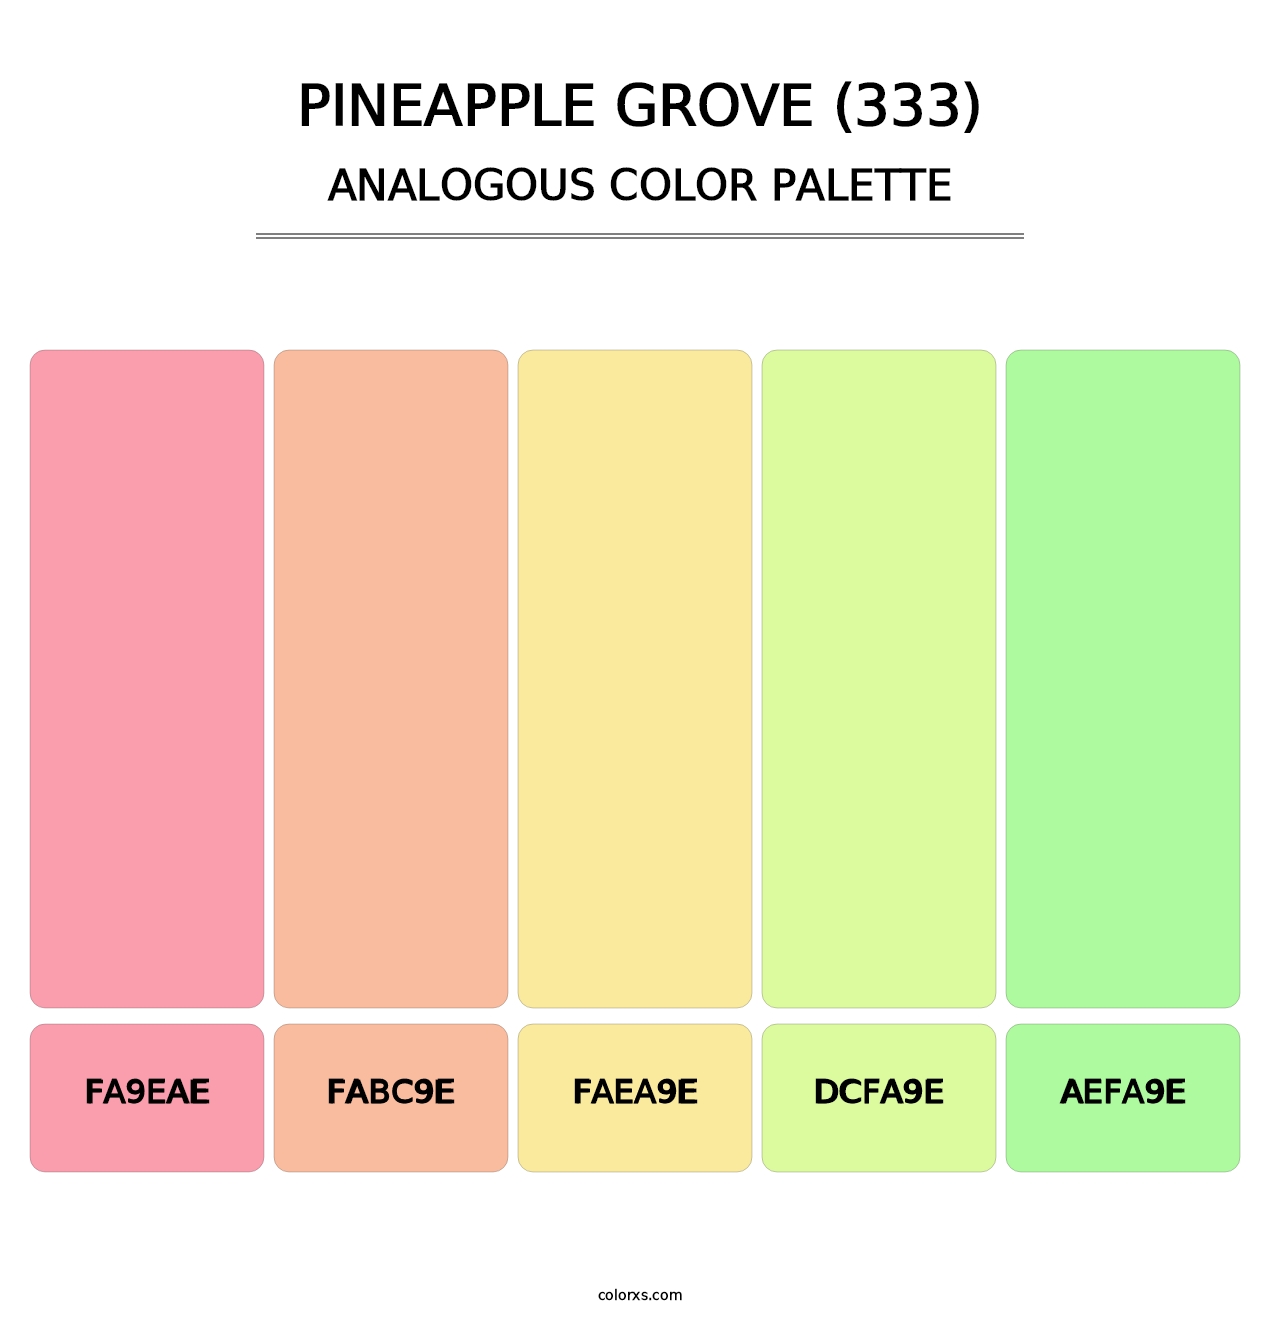 Pineapple Grove (333) - Analogous Color Palette